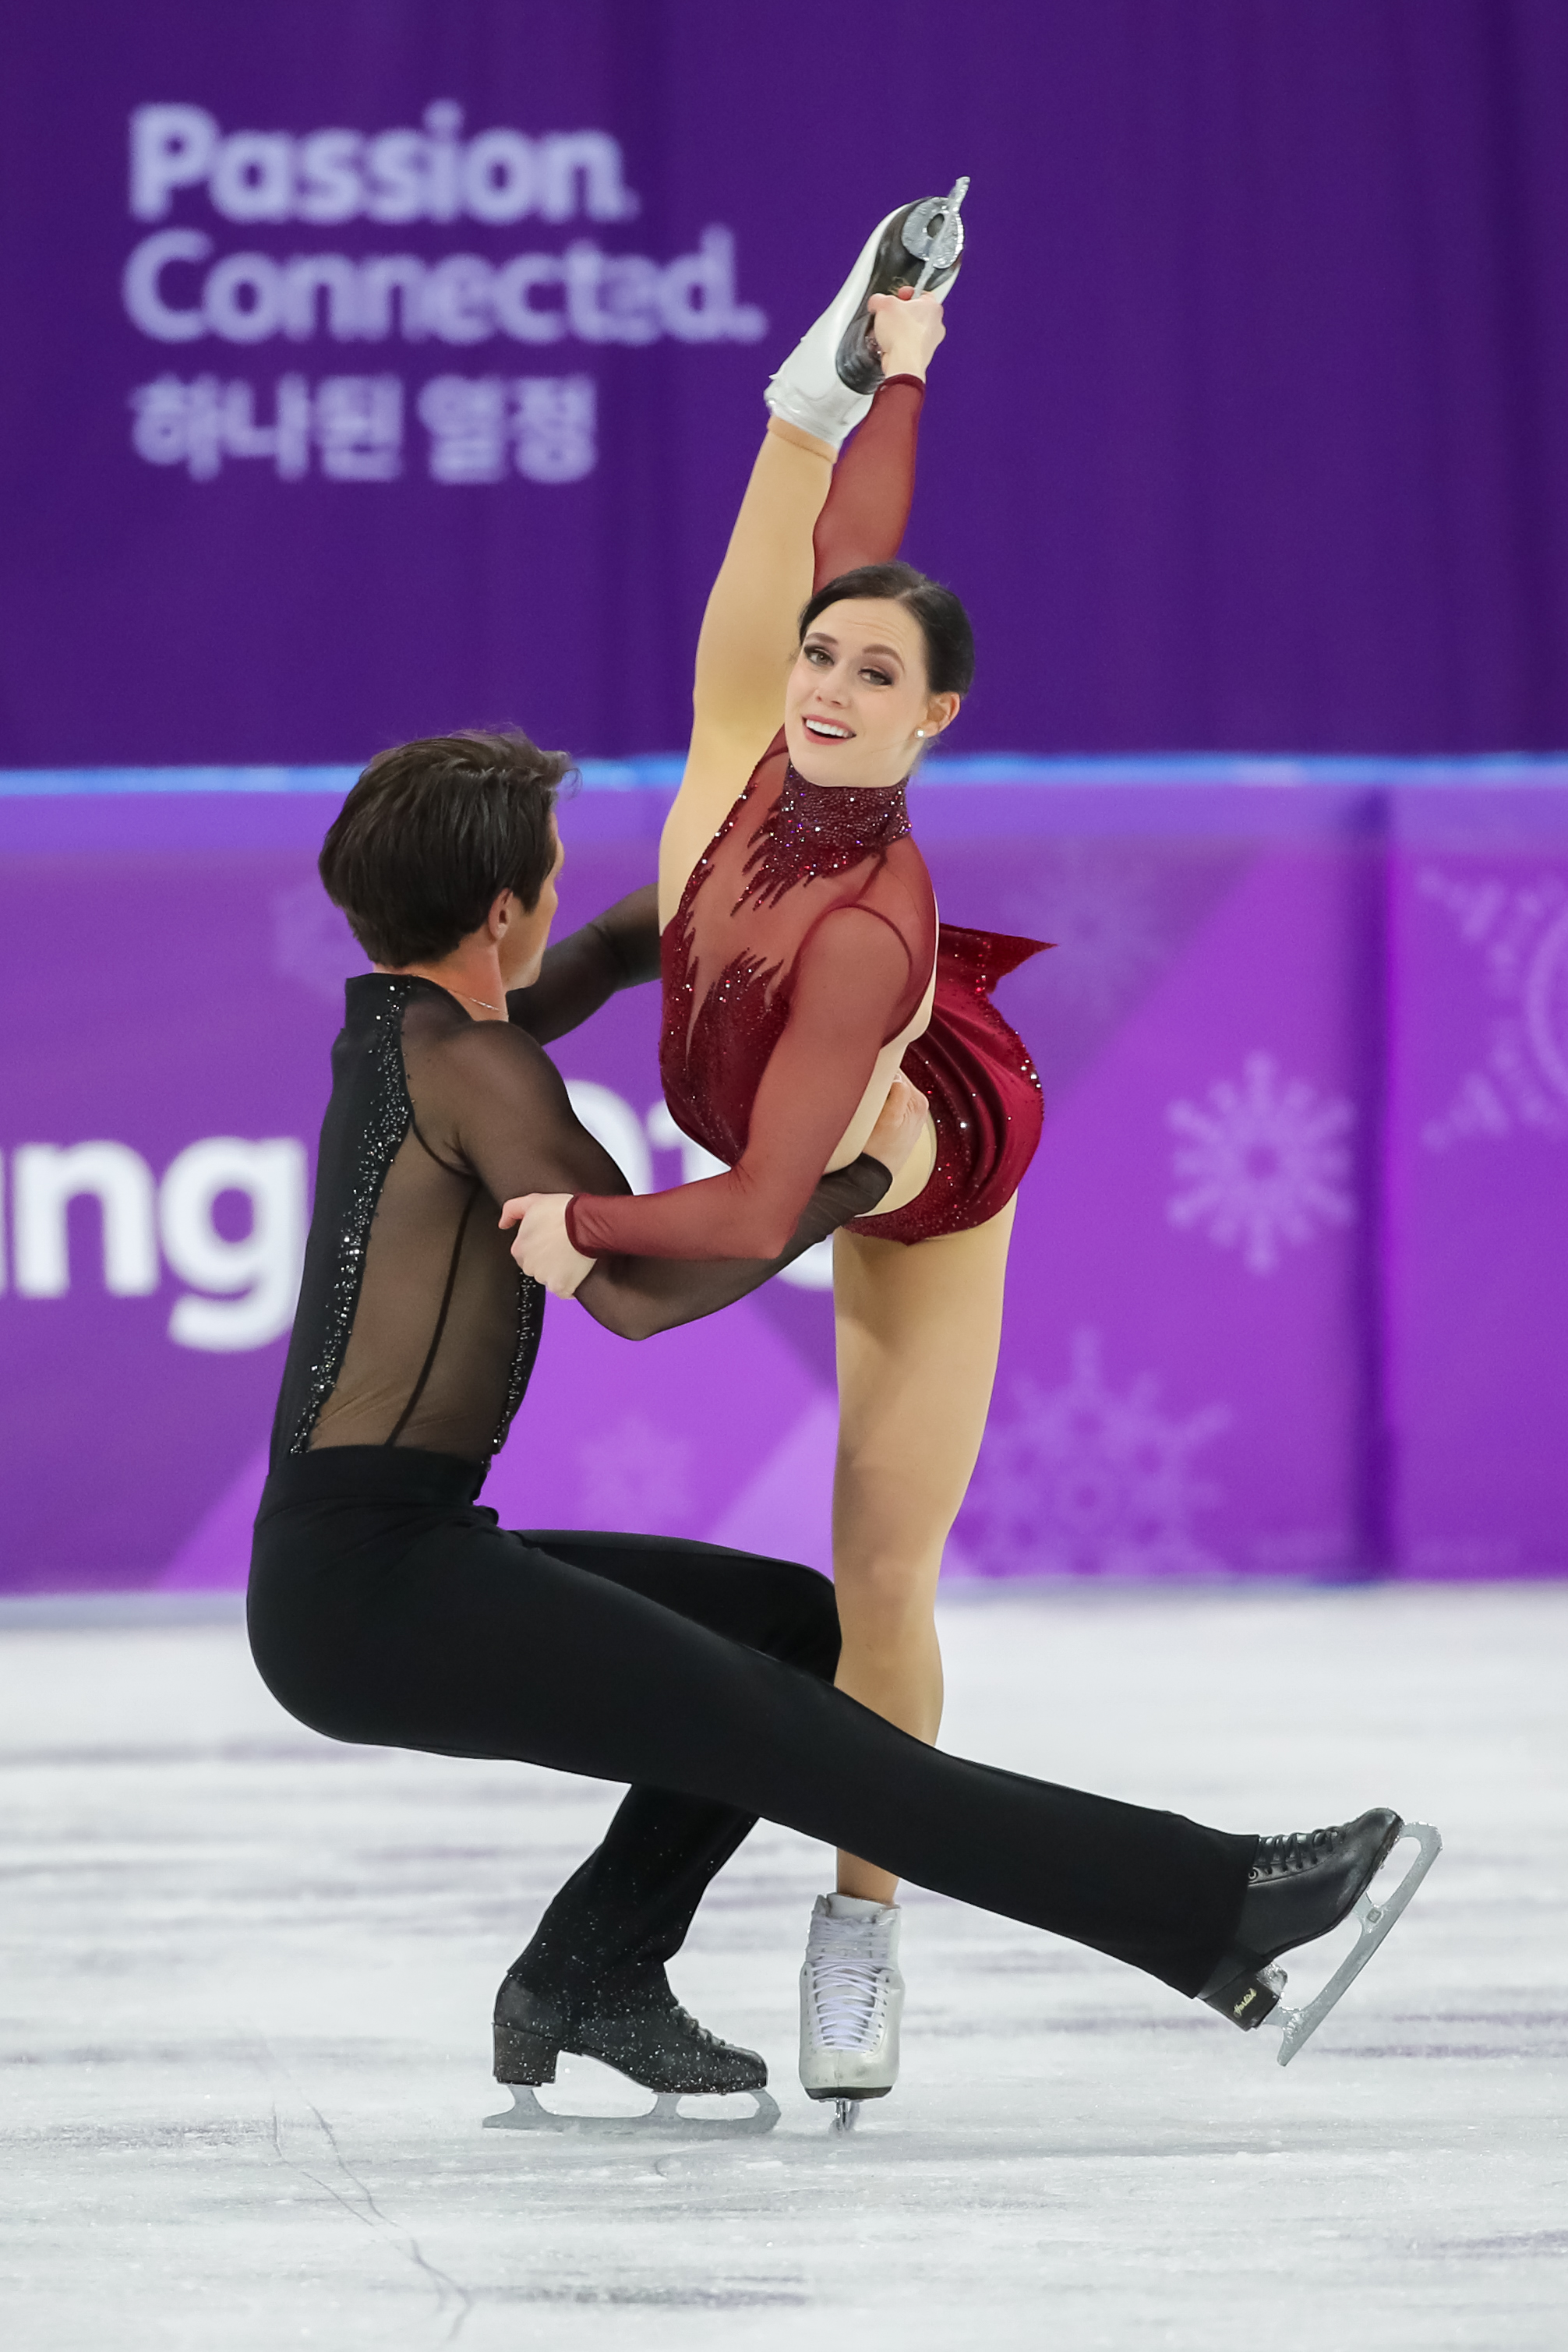 PyeongChang 2018 Olympic Winter Games